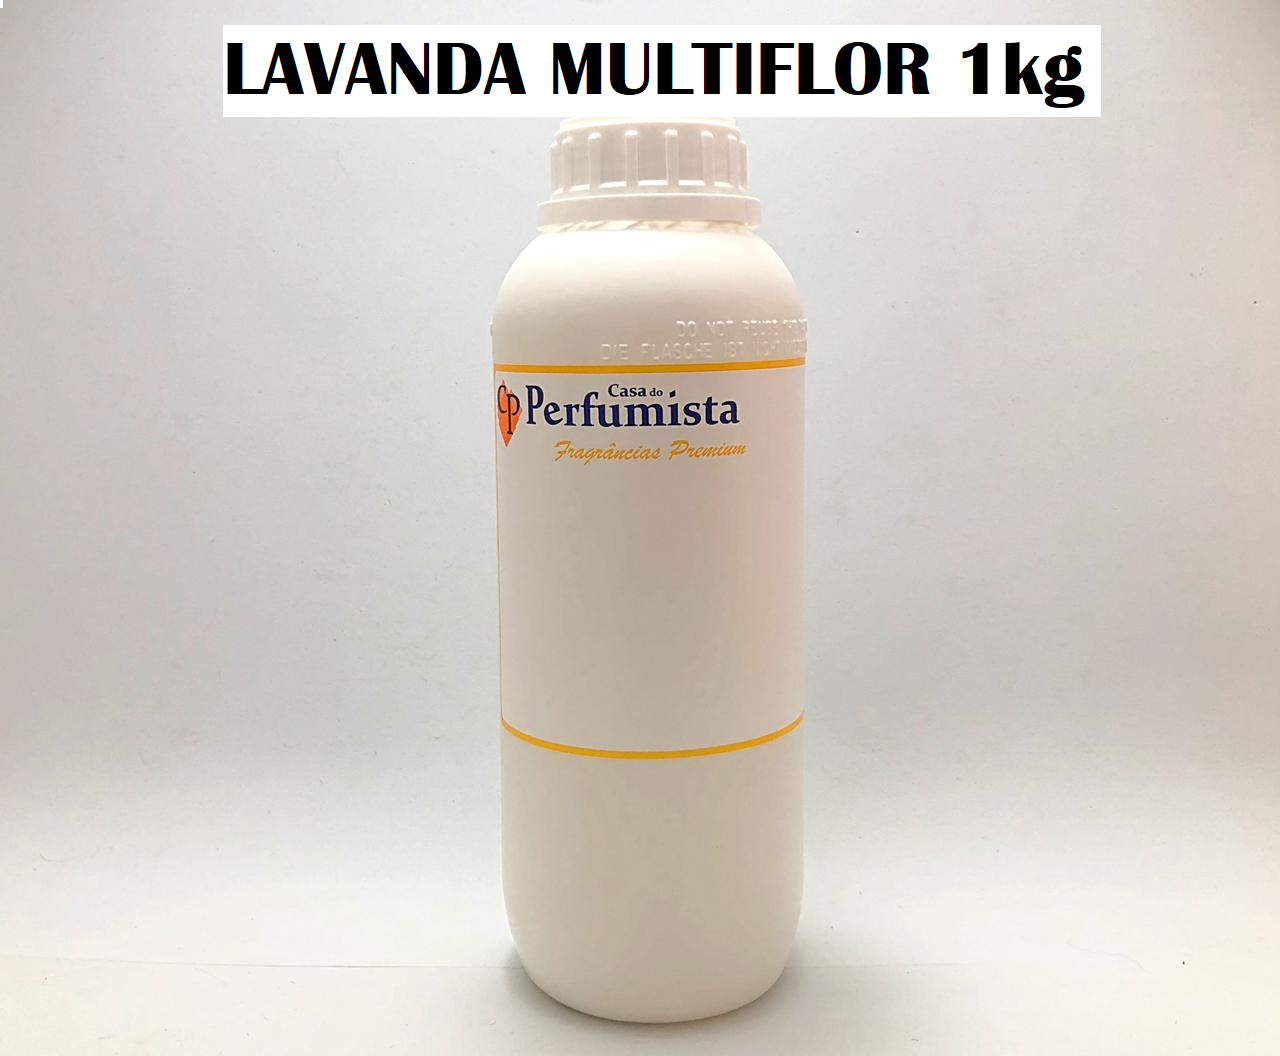 LAVANDA MULTIFLOR - 1kg